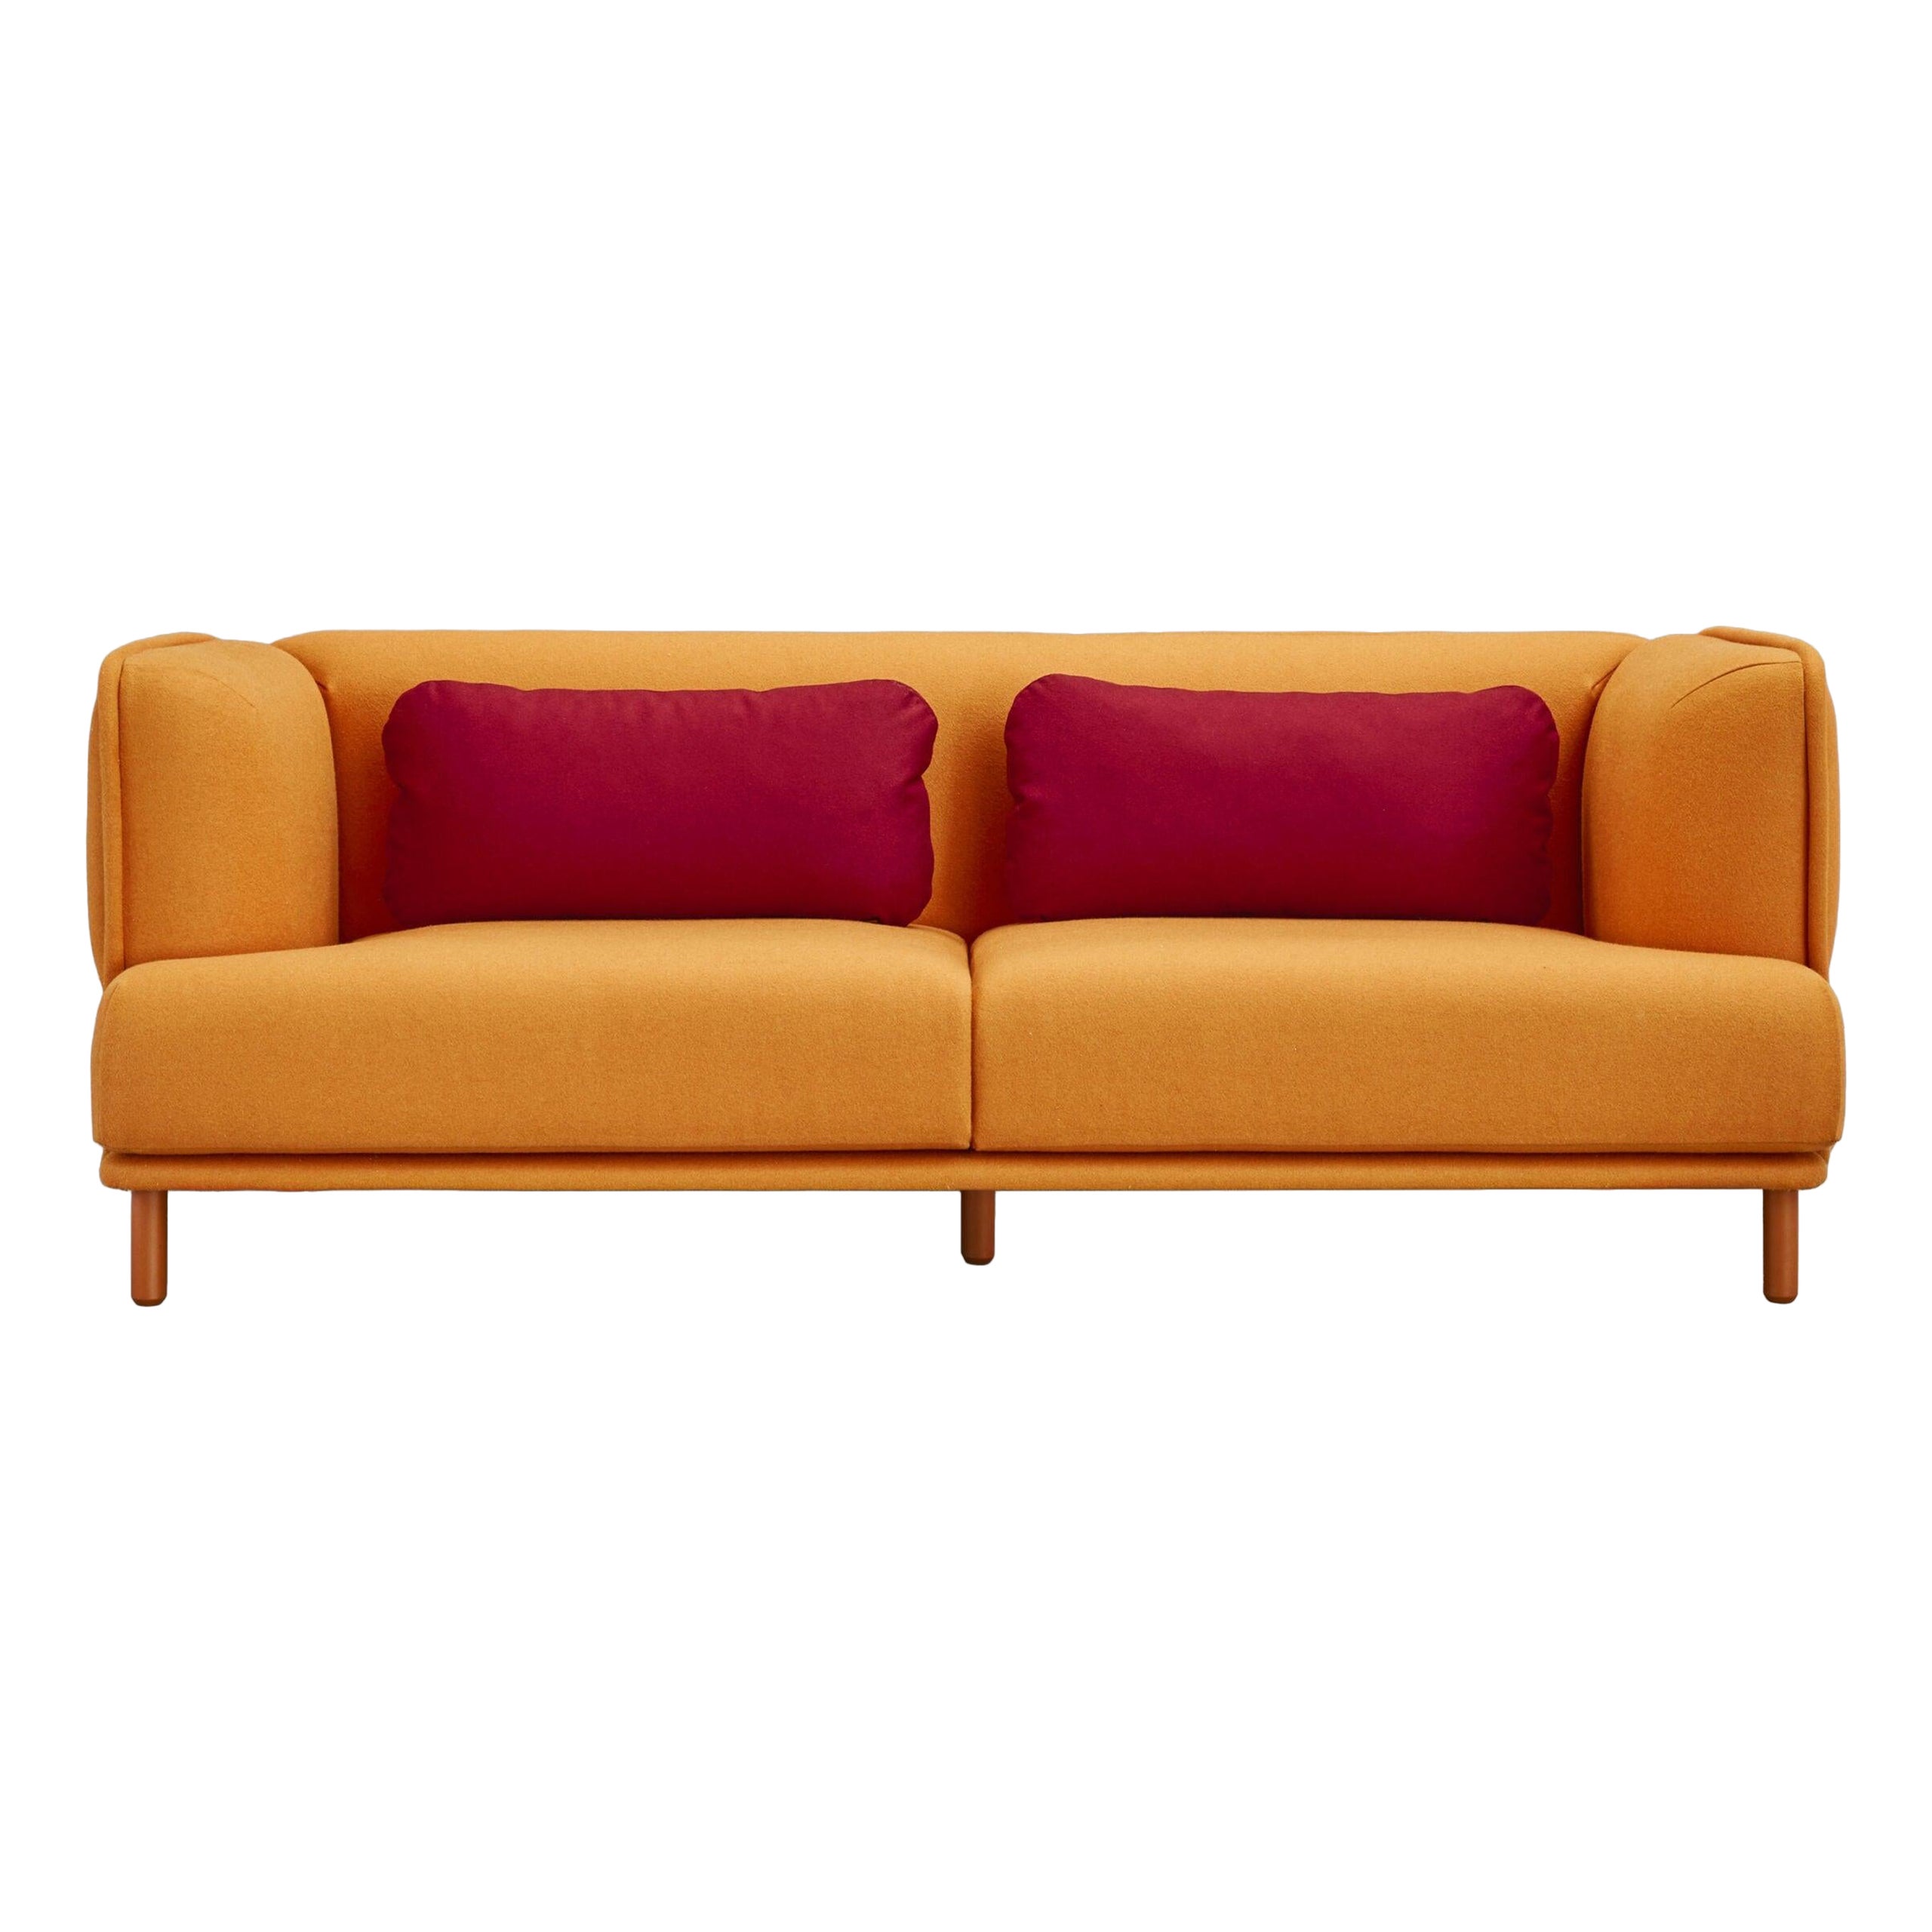 Hug Sofa, 2 Seaters by Cristian Reyes